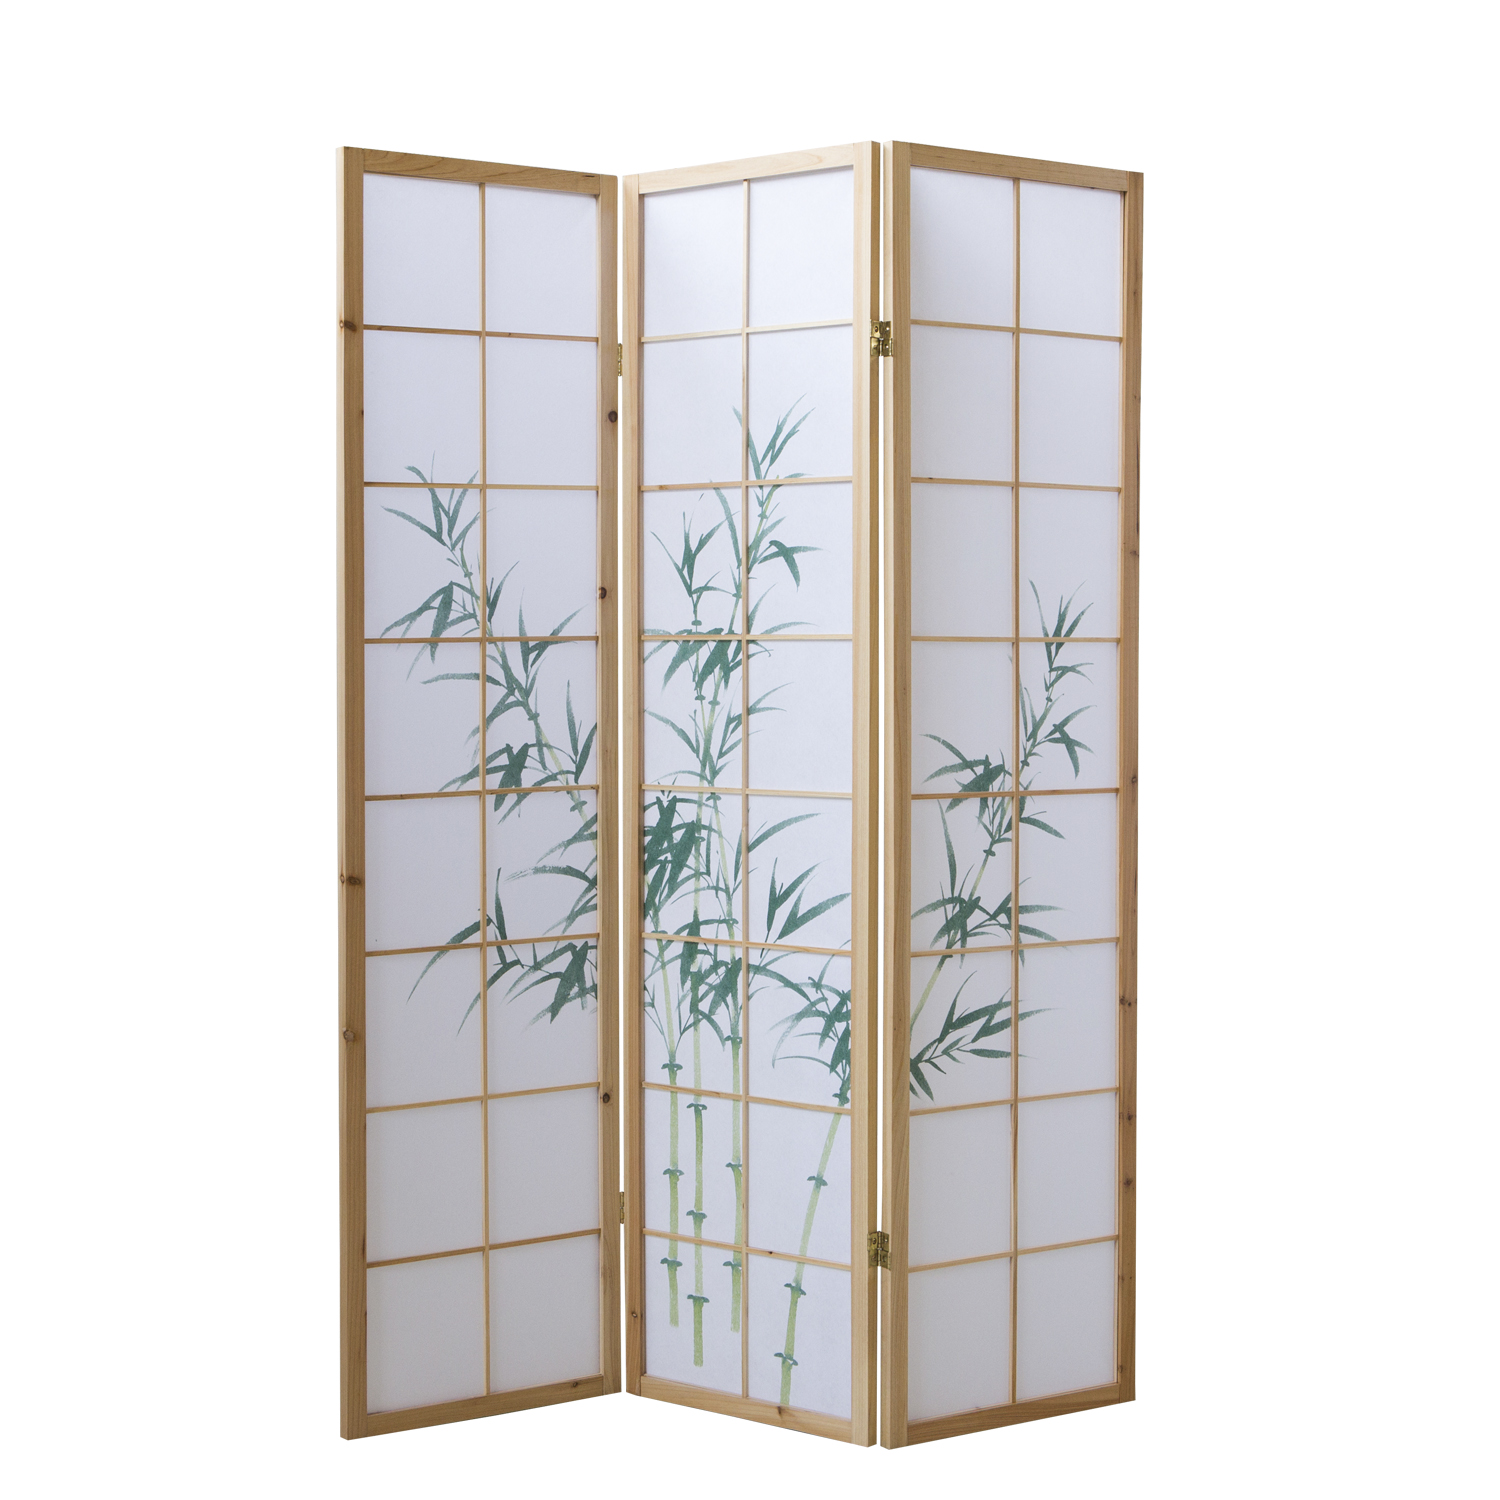 Paravent Raumteiler 3 teilig, Holz Natur, Reispapier Weiß, Bambusmuster, Höhe 175 cm	